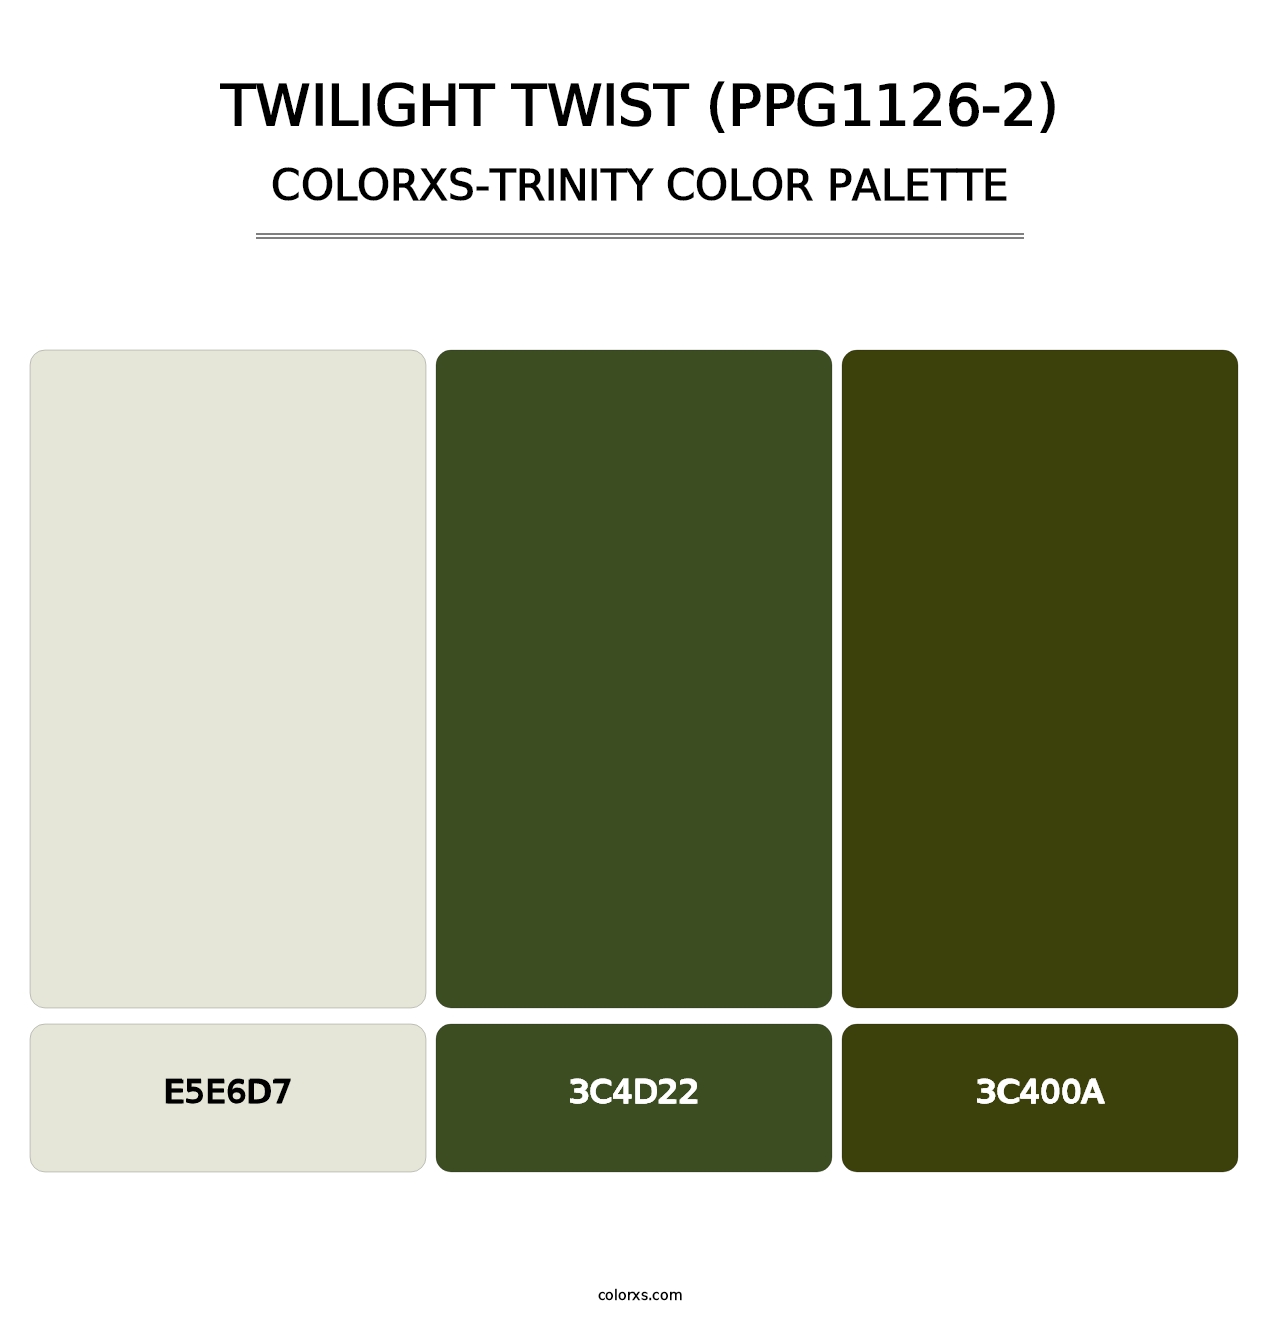 Twilight Twist (PPG1126-2) - Colorxs Trinity Palette